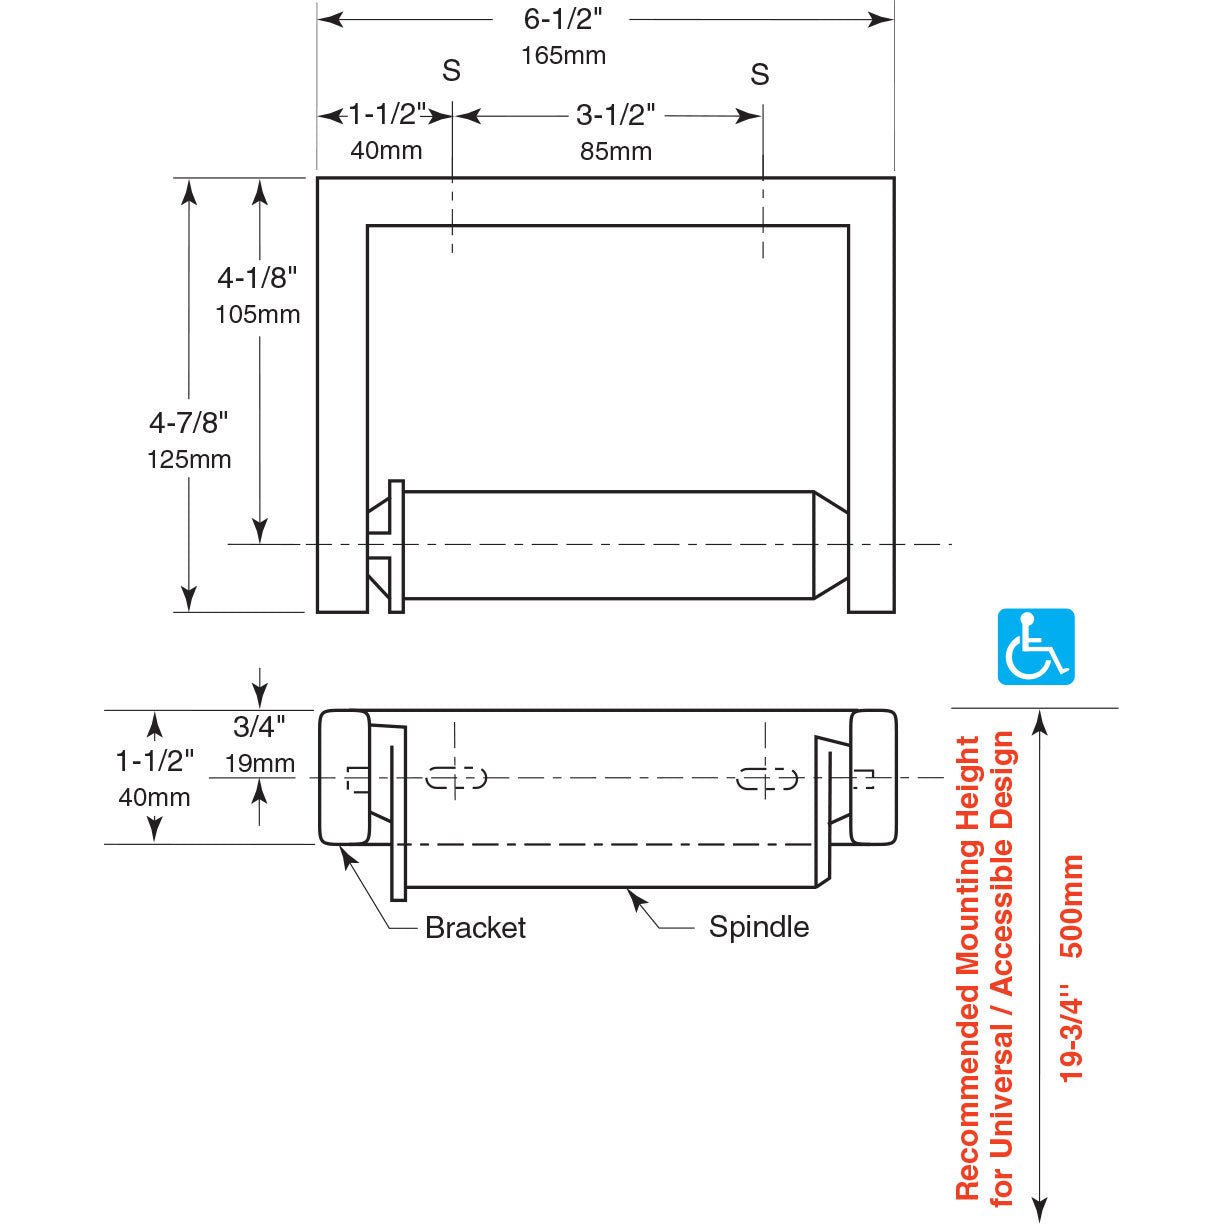 Bobrick 2730 - ClassicSeries Surface Mounted Cast Aluminum Toilet Tissue Holder Dispenser